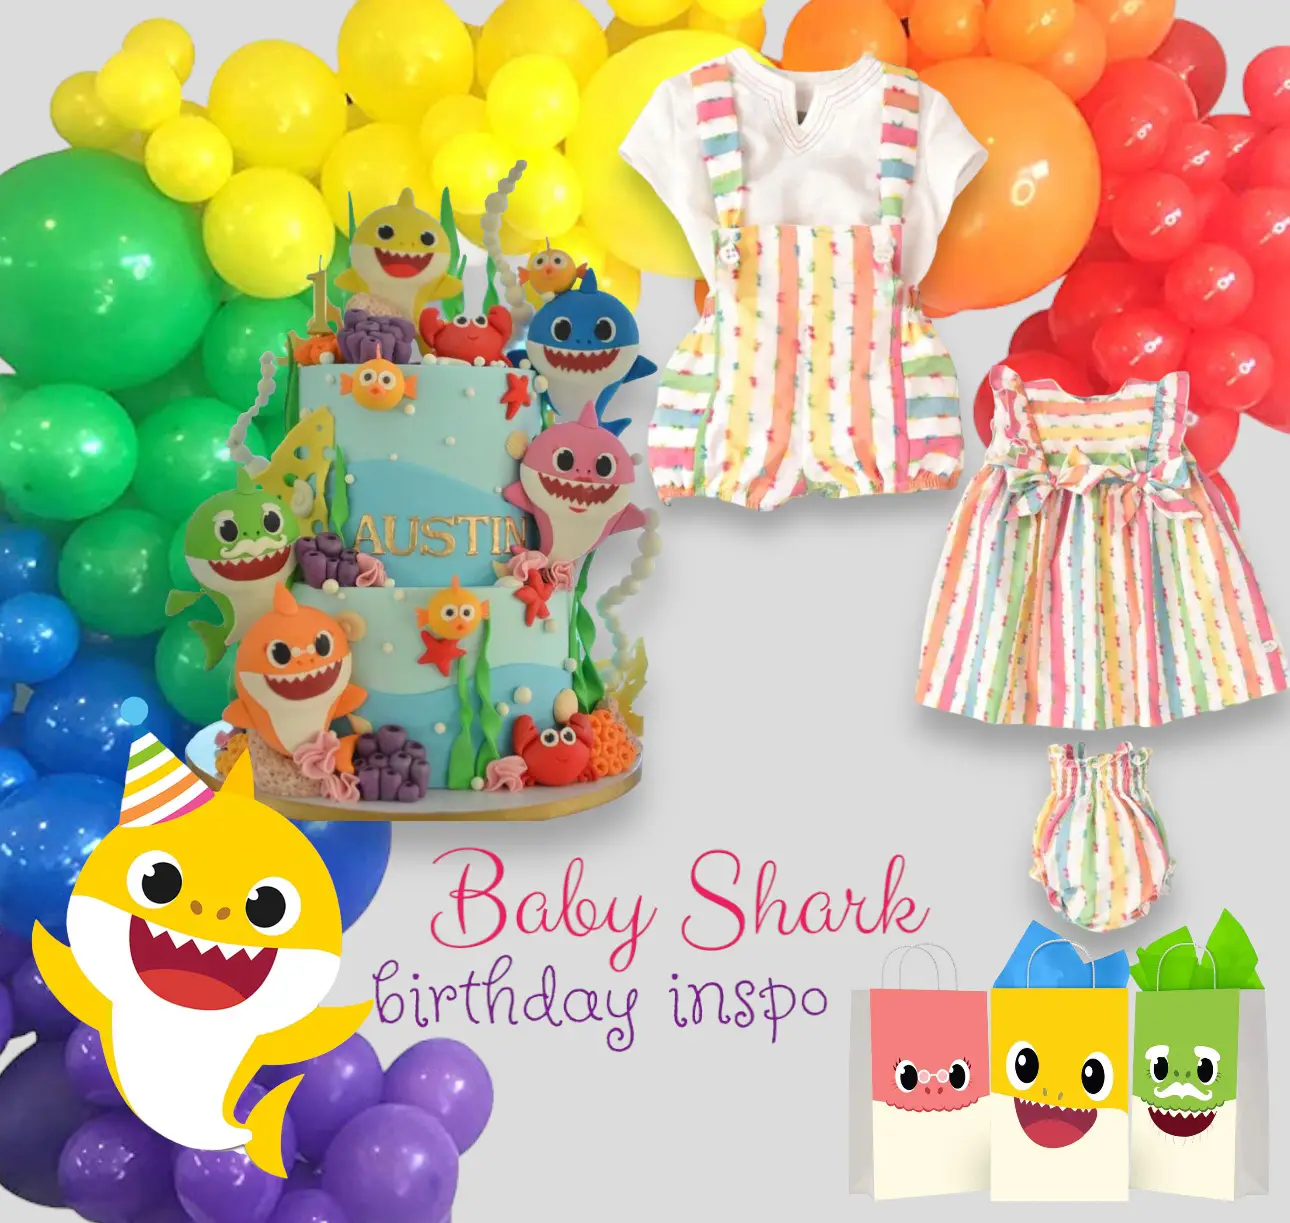 Baby Shark Birthday Decorations - Lemon8 Search